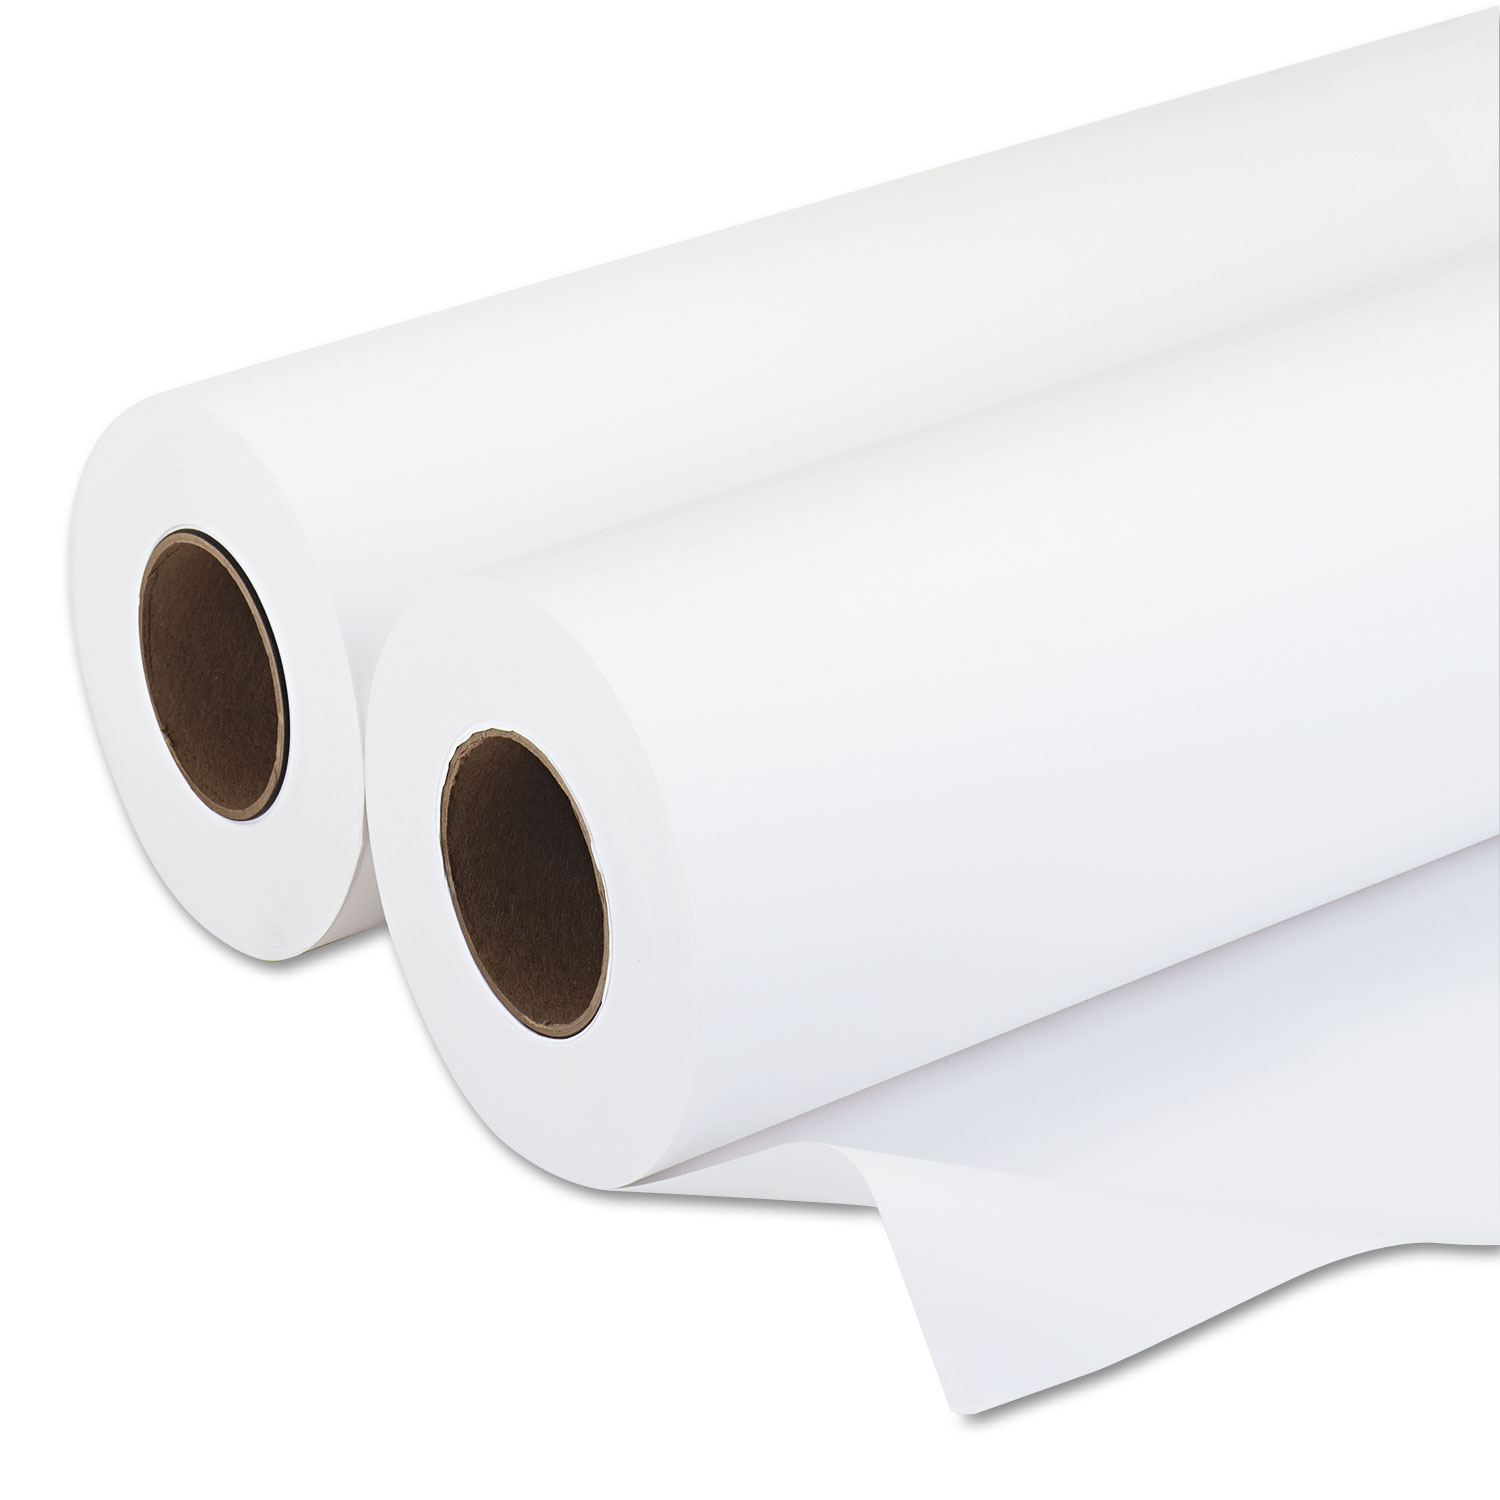  Iconex 9136 Amerigo Wide-Format Paper, 3 Core, 20 lb, 36 x 500 ft, Smooth White, 2/Pack (ICX90750205) 